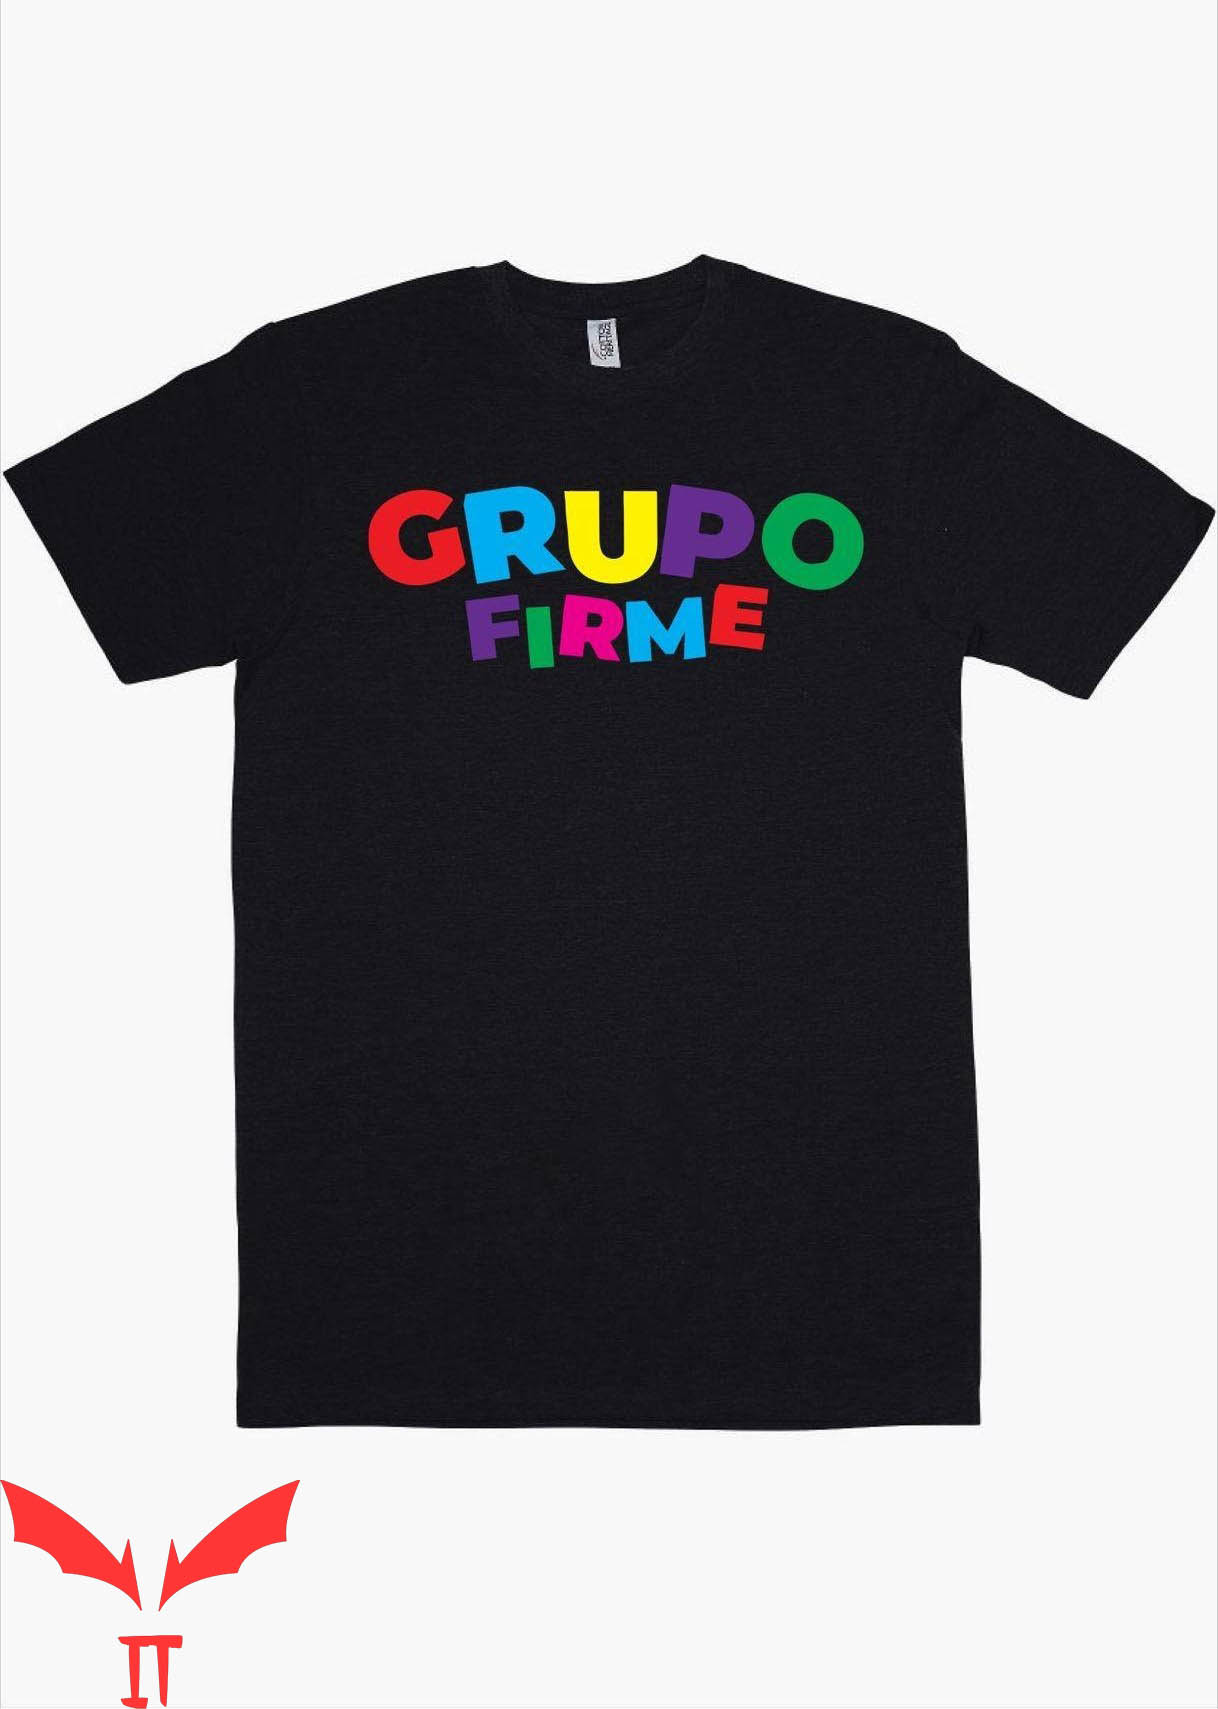 Grupo Firme T-Shirt Regional Mexican Music Band Merch Tee